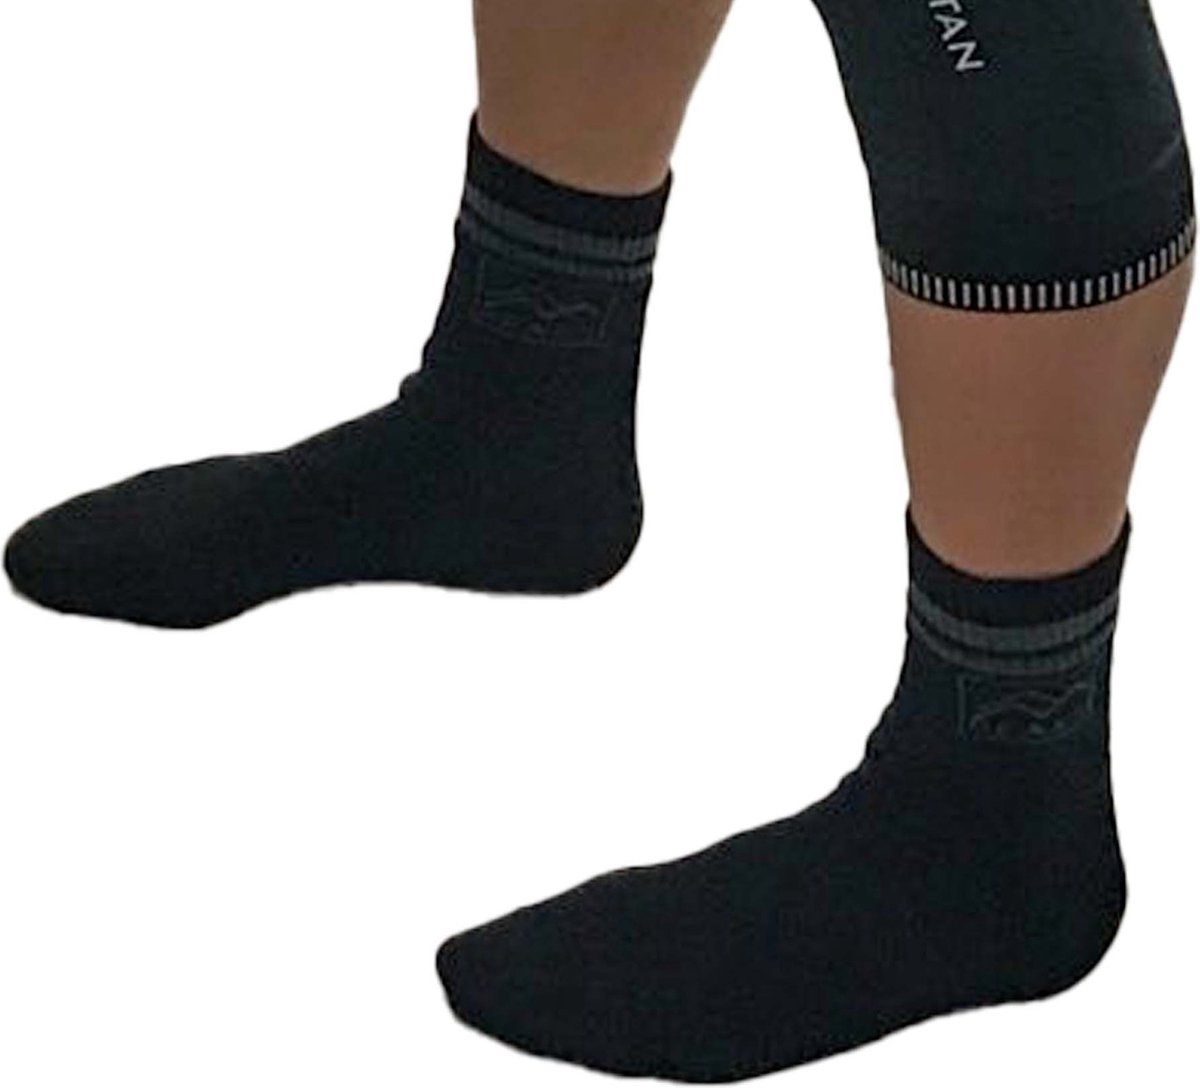 Peaks waterproof socks - waterdichte sokken - L